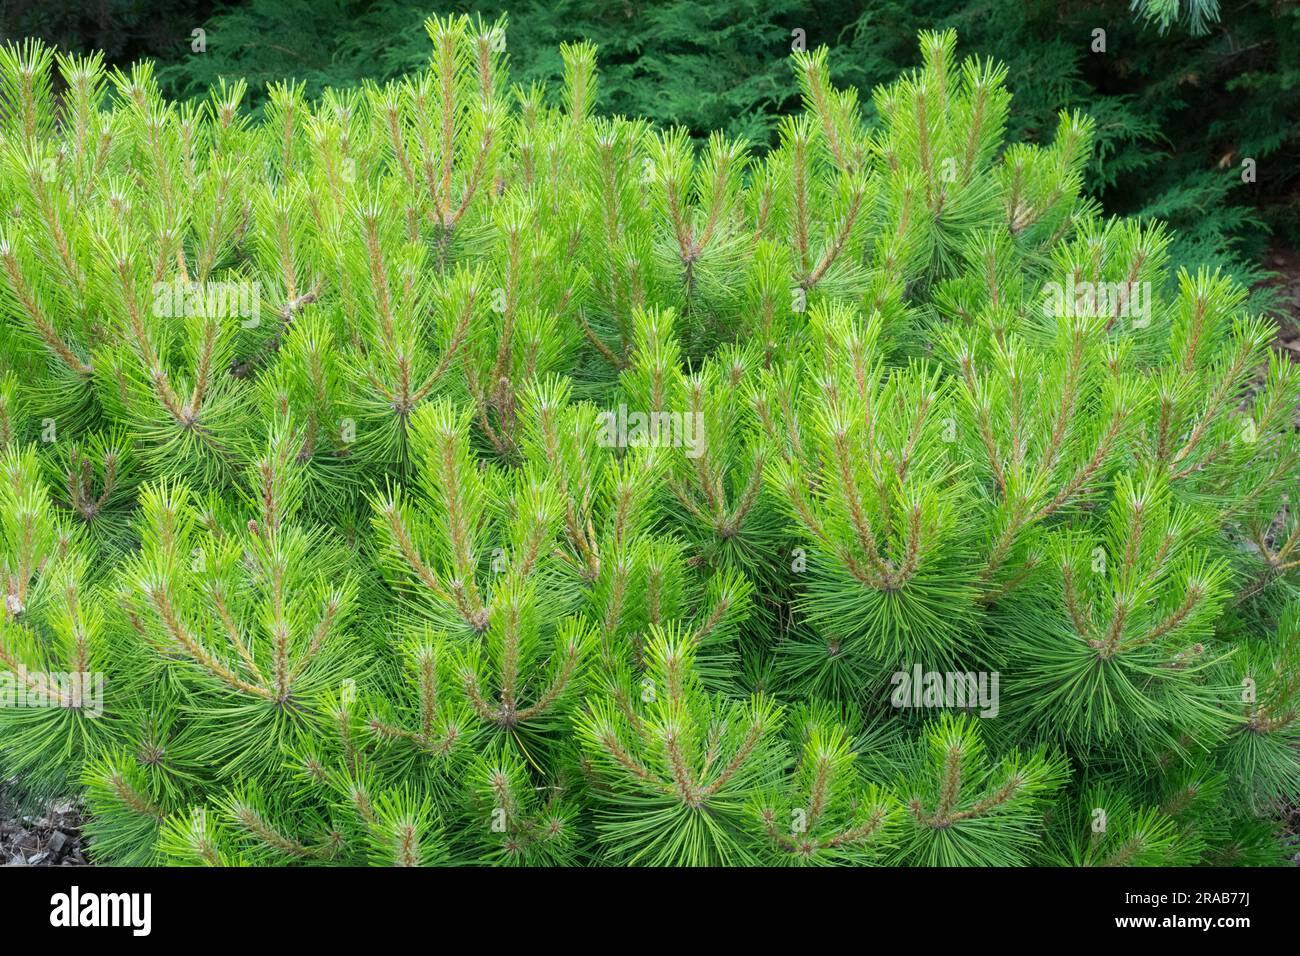 Red Pine, Pinus resinosa 'Don Smith', Nadeln, Zweige, Pine, American Red Pine, Kultivar, Pinie Rouge, Garten Pinus Laub Stockfoto